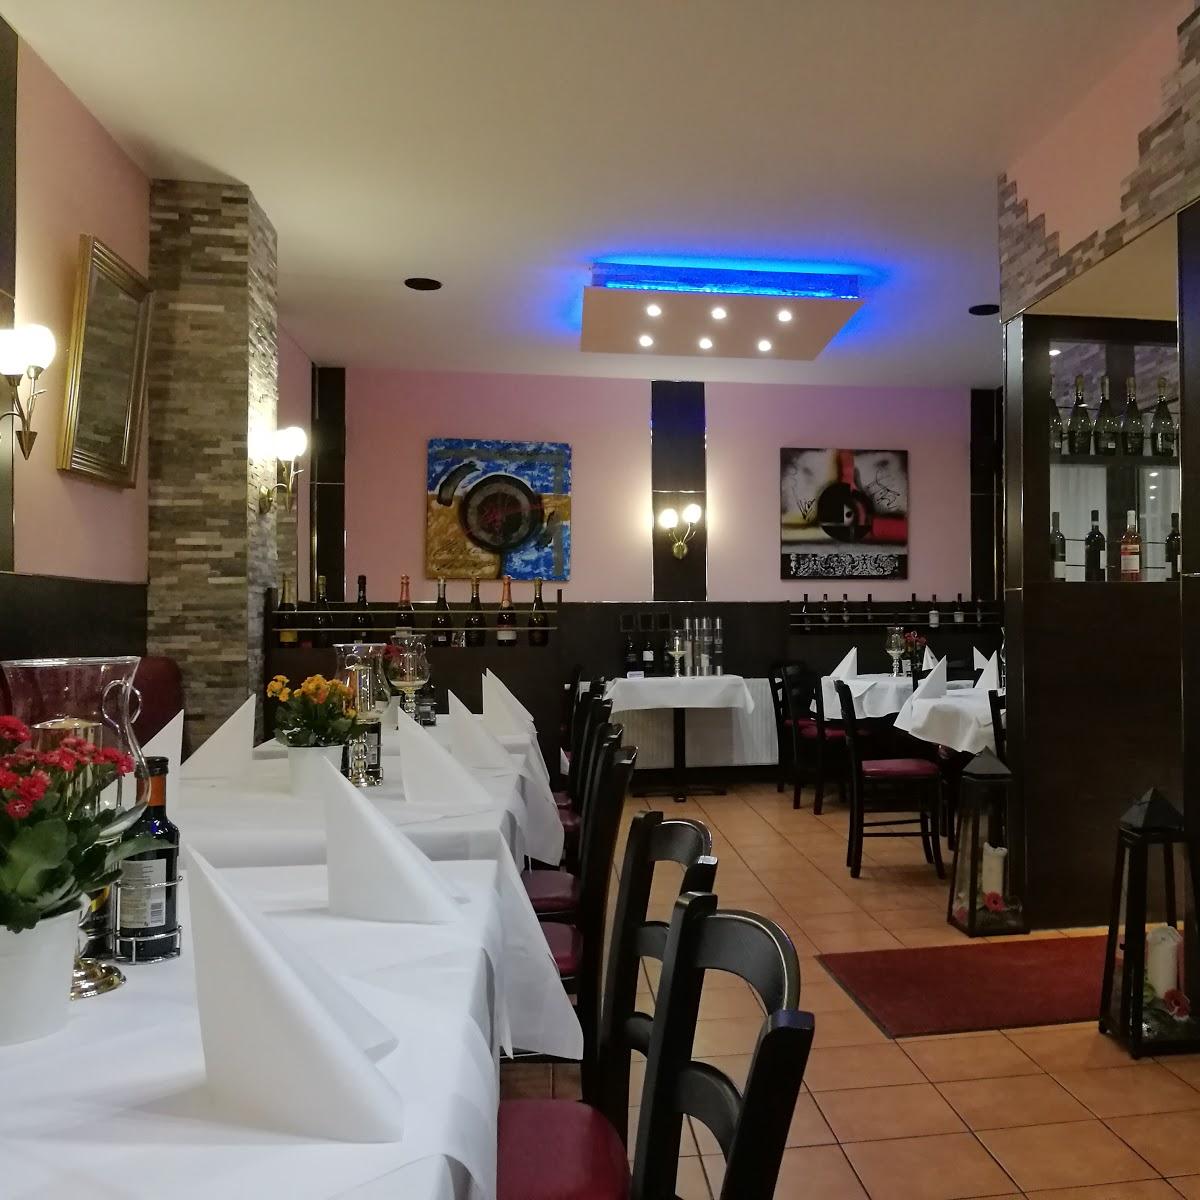 Restaurant "Antonio-Pizzaexpress" in Ludwigsburg